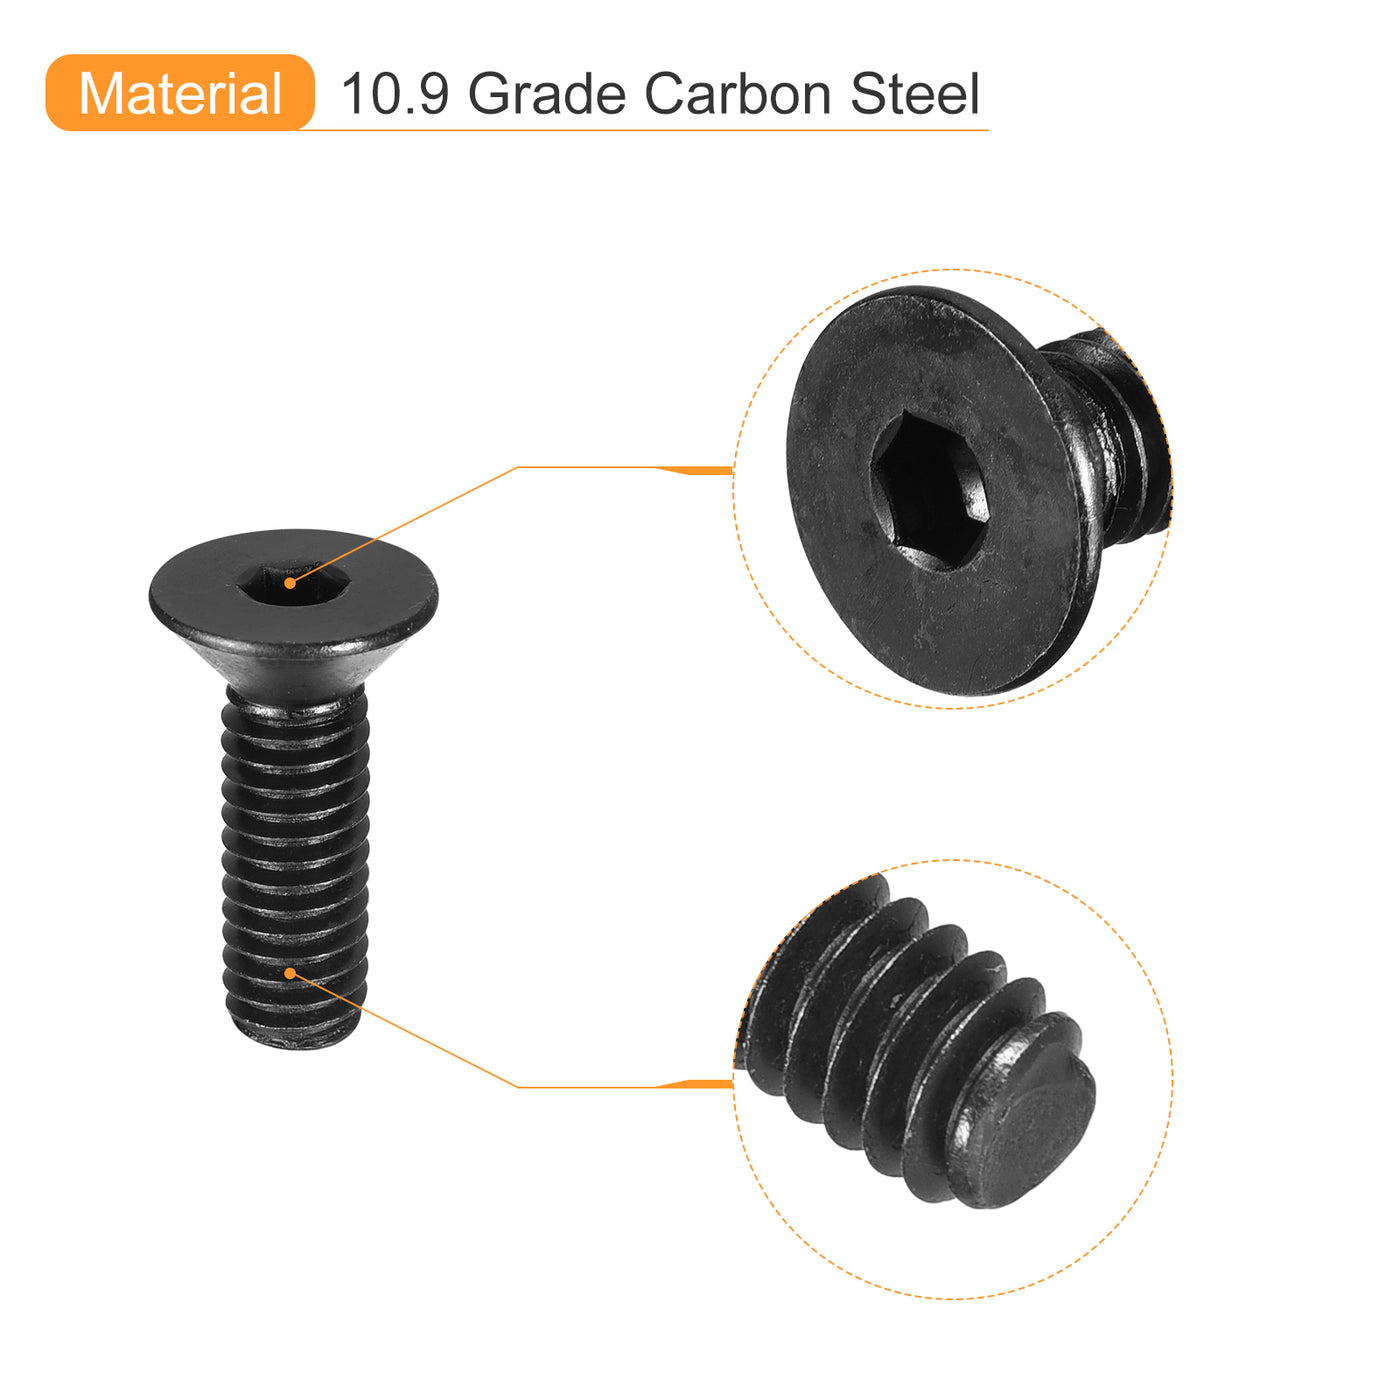 uxcell Uxcell 5/16-18x1" Flat Head Socket Cap Screws, 10.9 Grade Carbon Steel, 15PCS